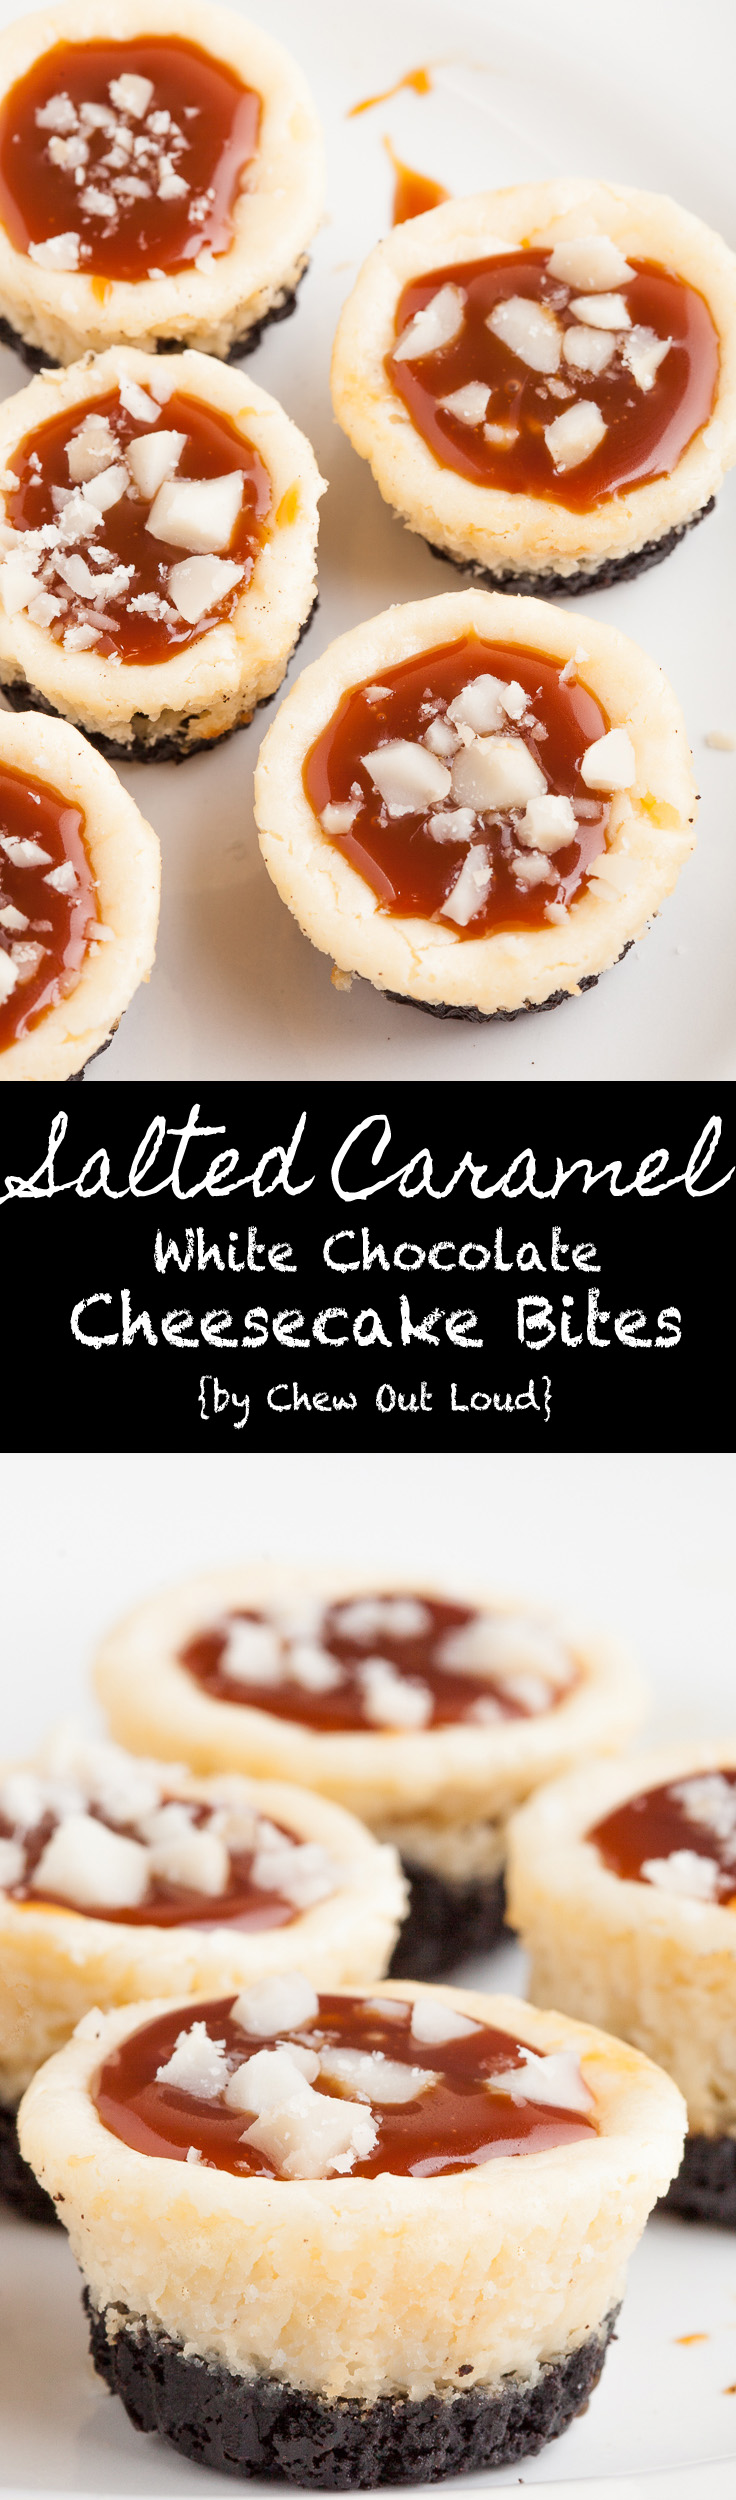 Salted Caramel White Chocolate Cheesecake_edited-1